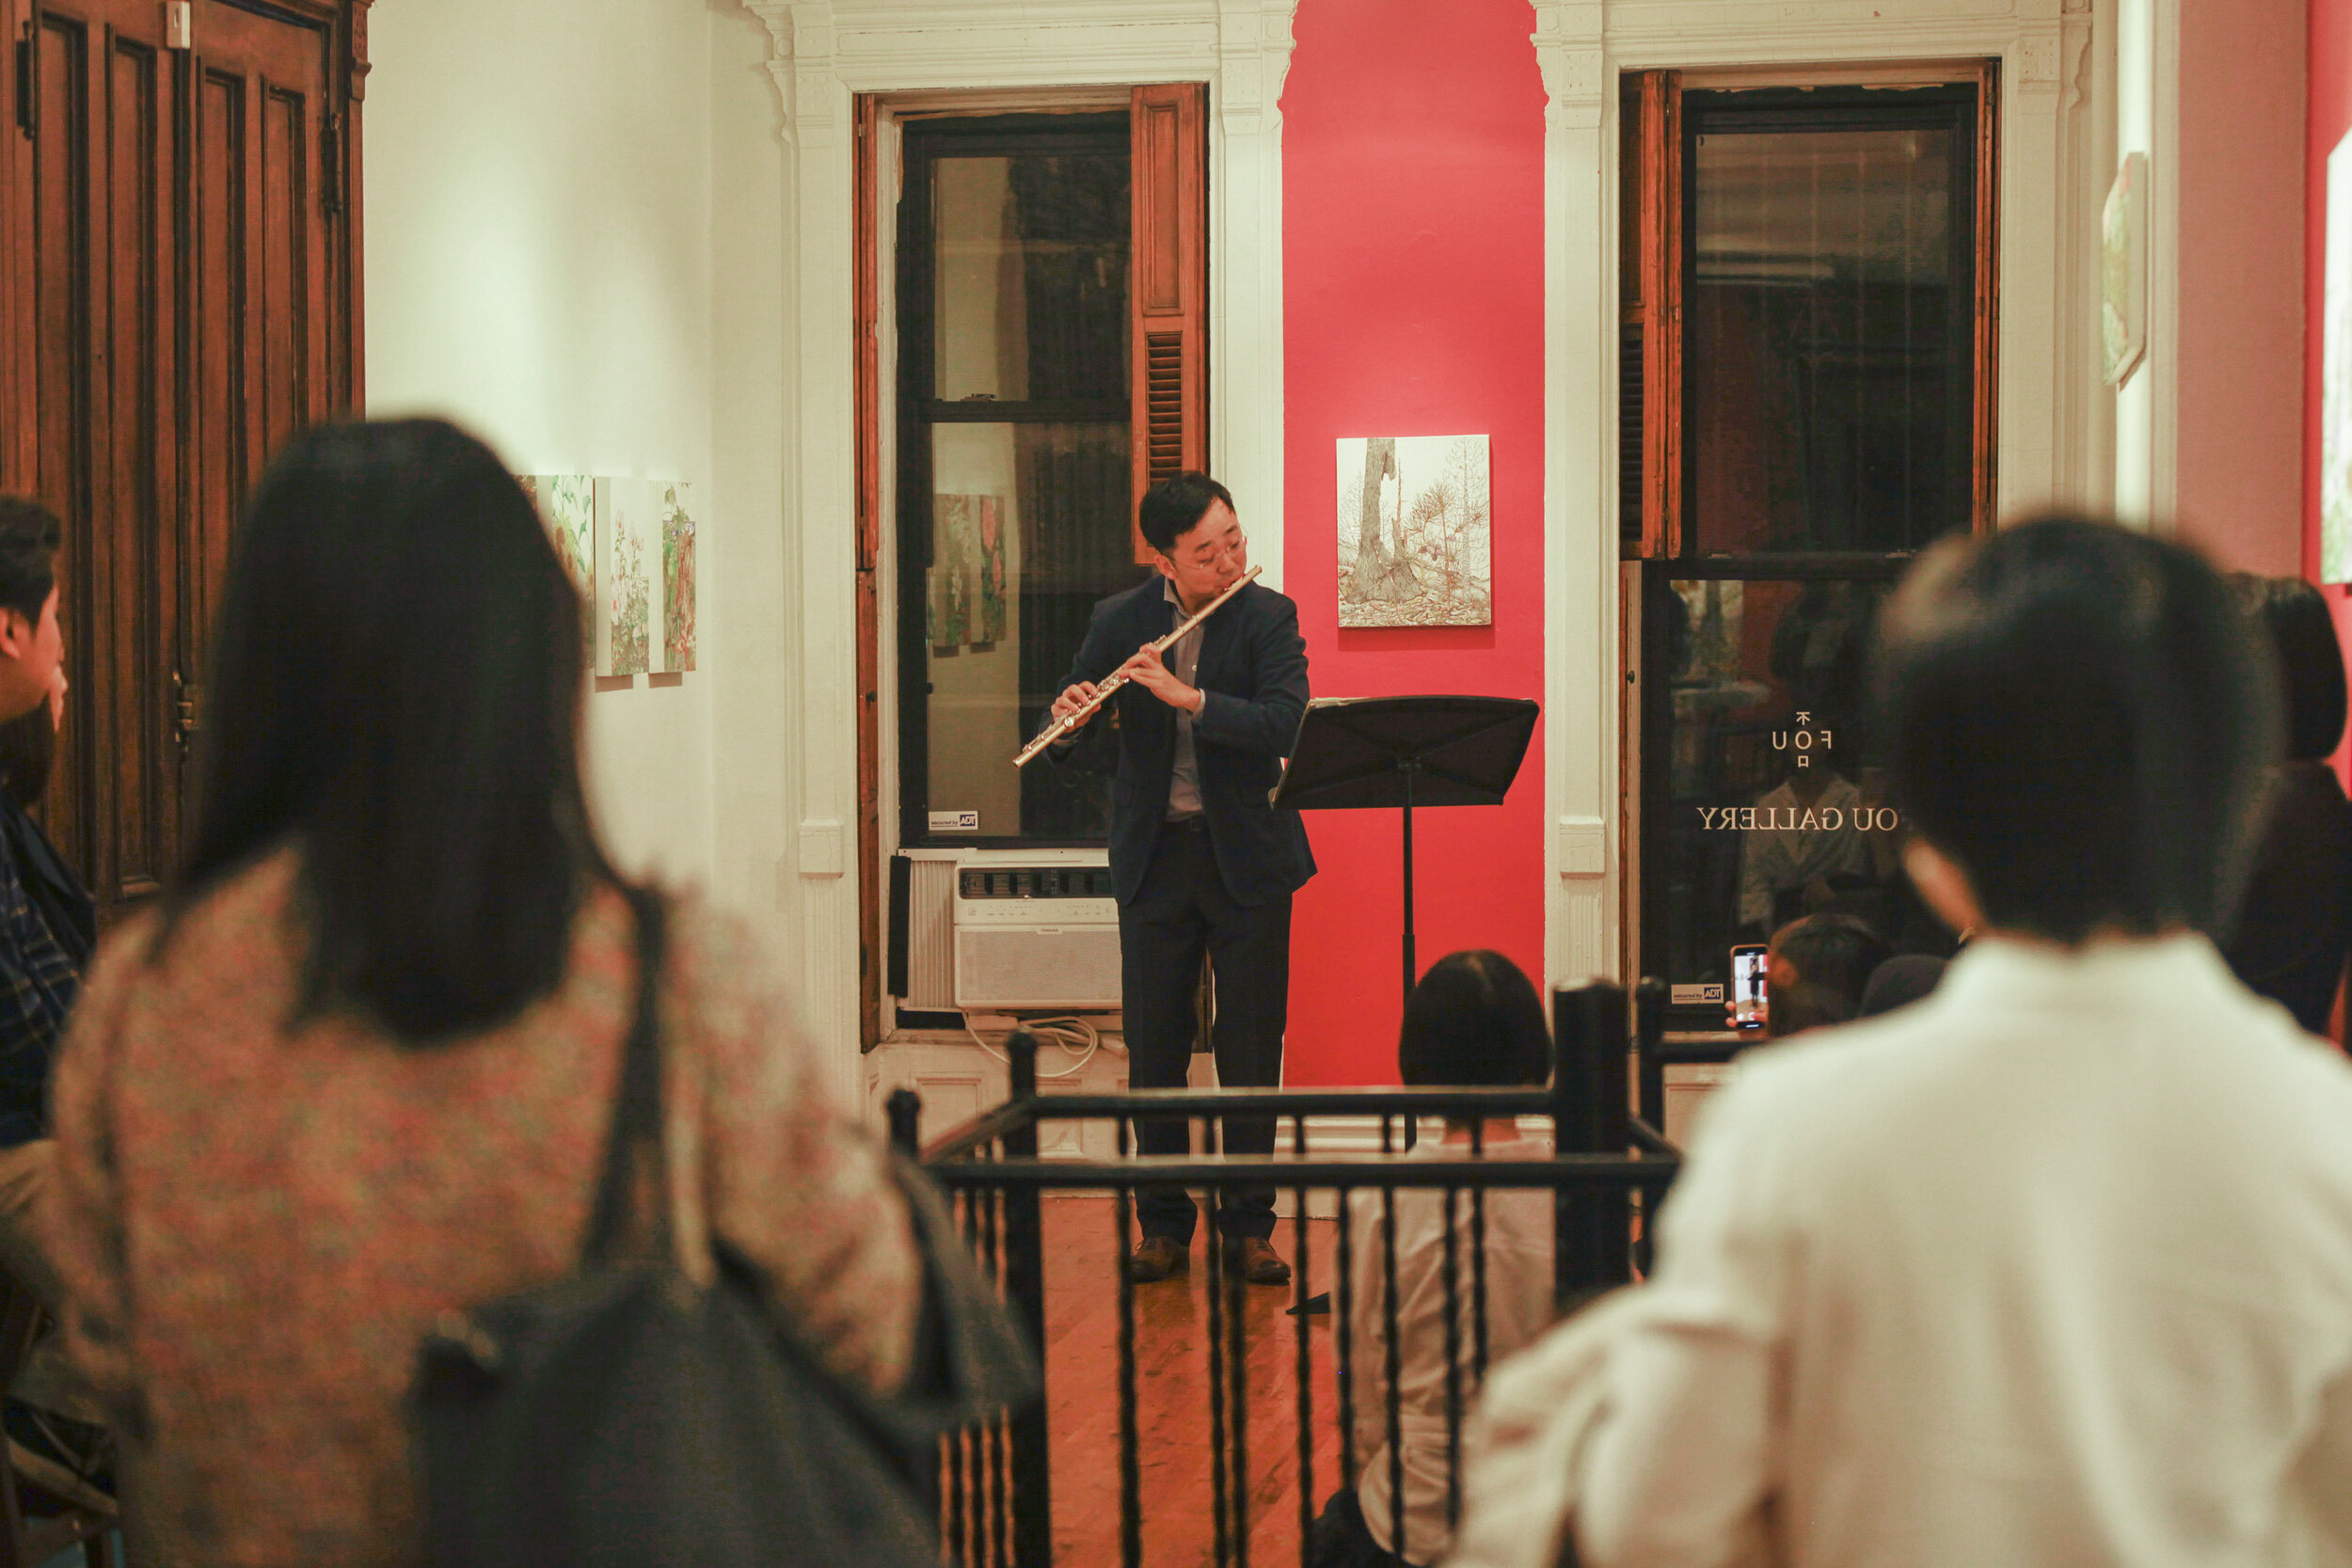   Zuoliang Liu Flute Recital at Present  at Fou Gallery, photo by Yilan Wang, courtesy Fou Gallery. 